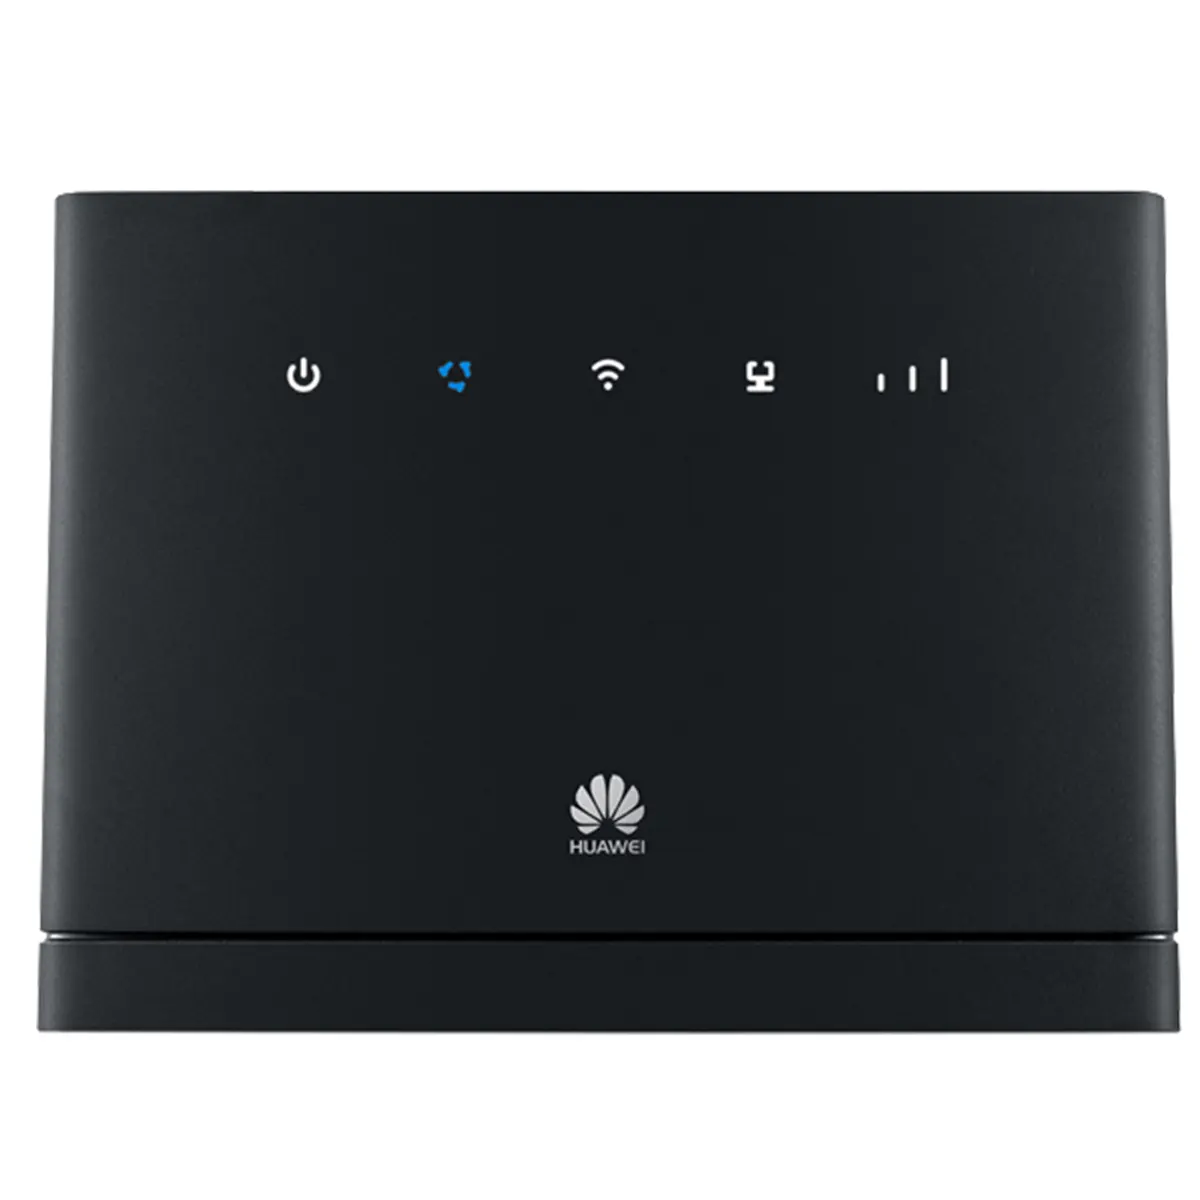 مودم - روتر 4G LTE هوآوی Huawei B315 4G LTE WiFi Modem رنگ مشکی (1)